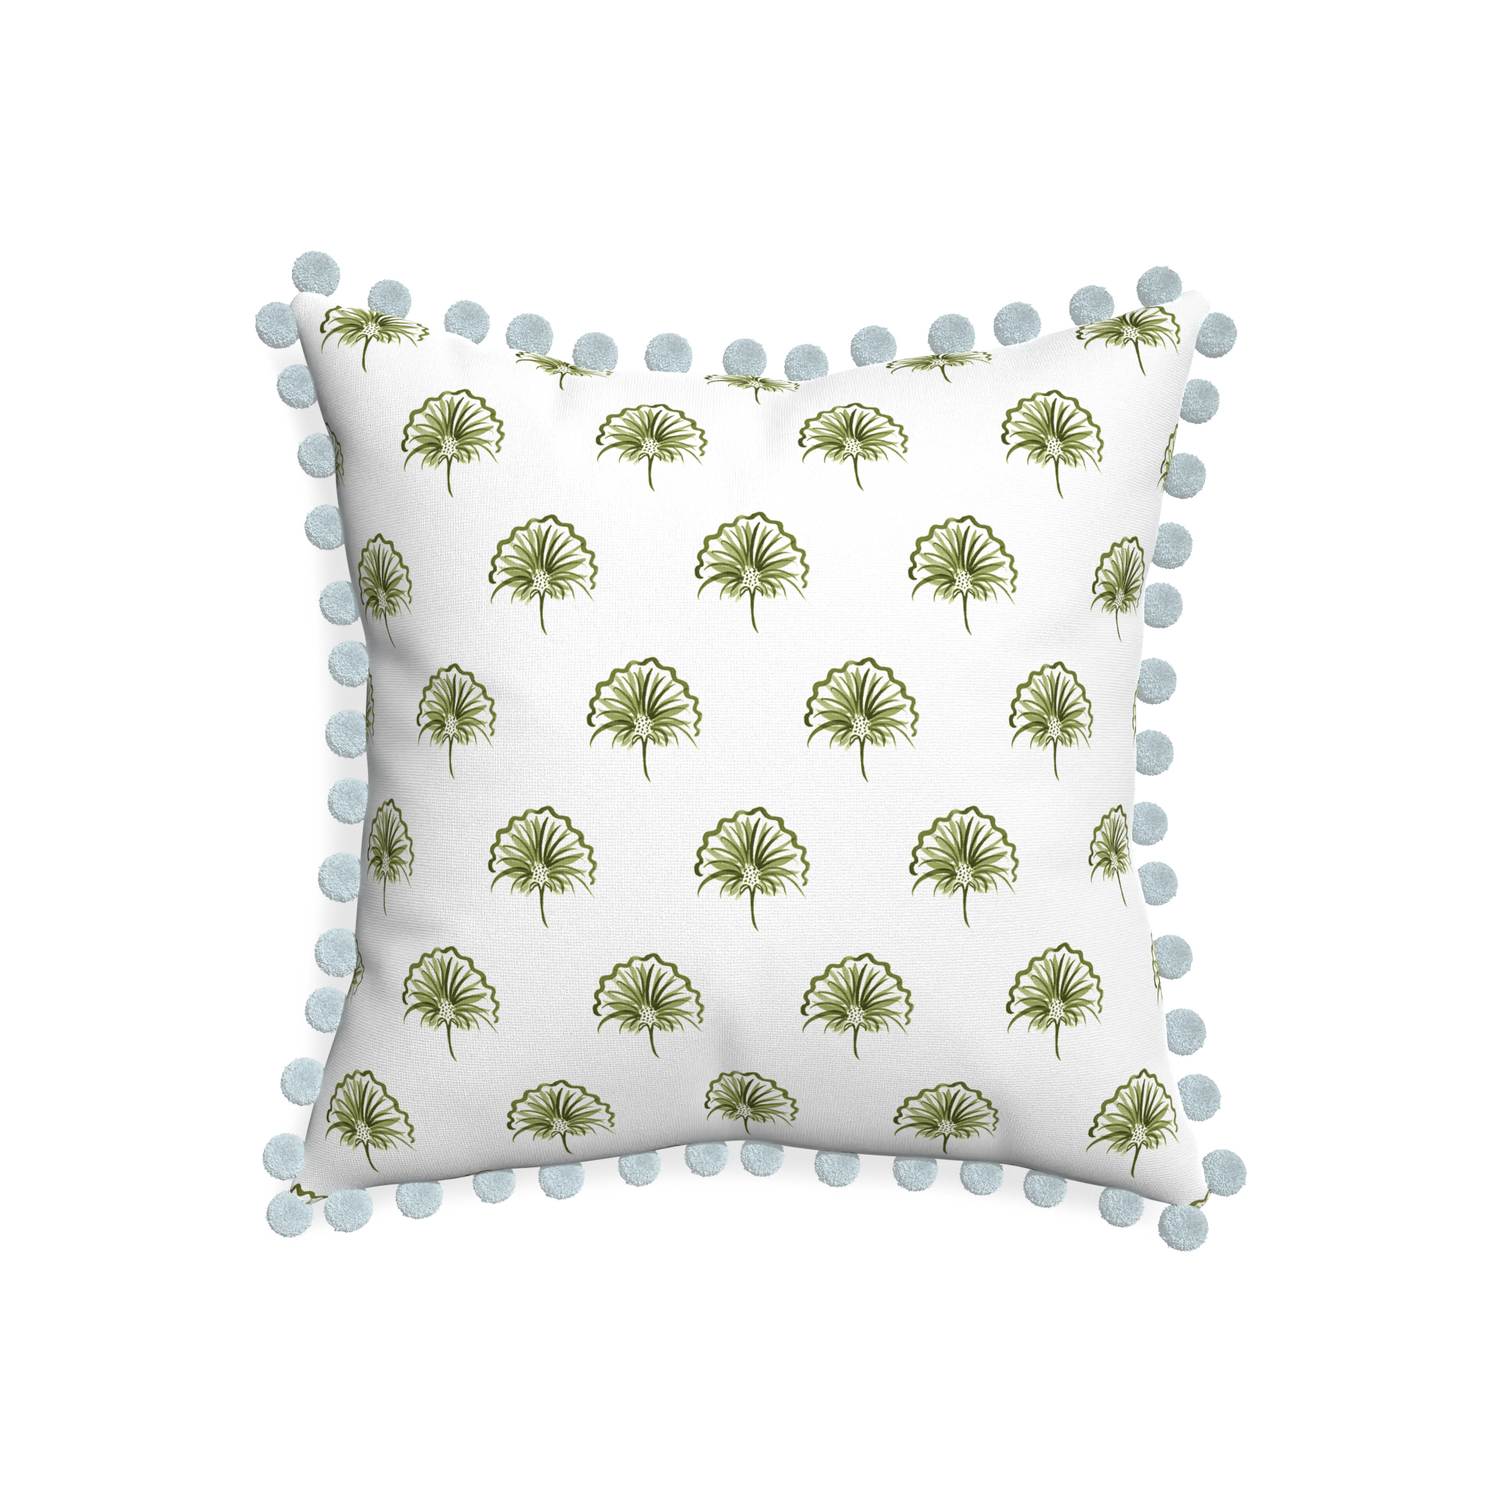 20-square penelope moss custom pillow with powder pom pom on white background